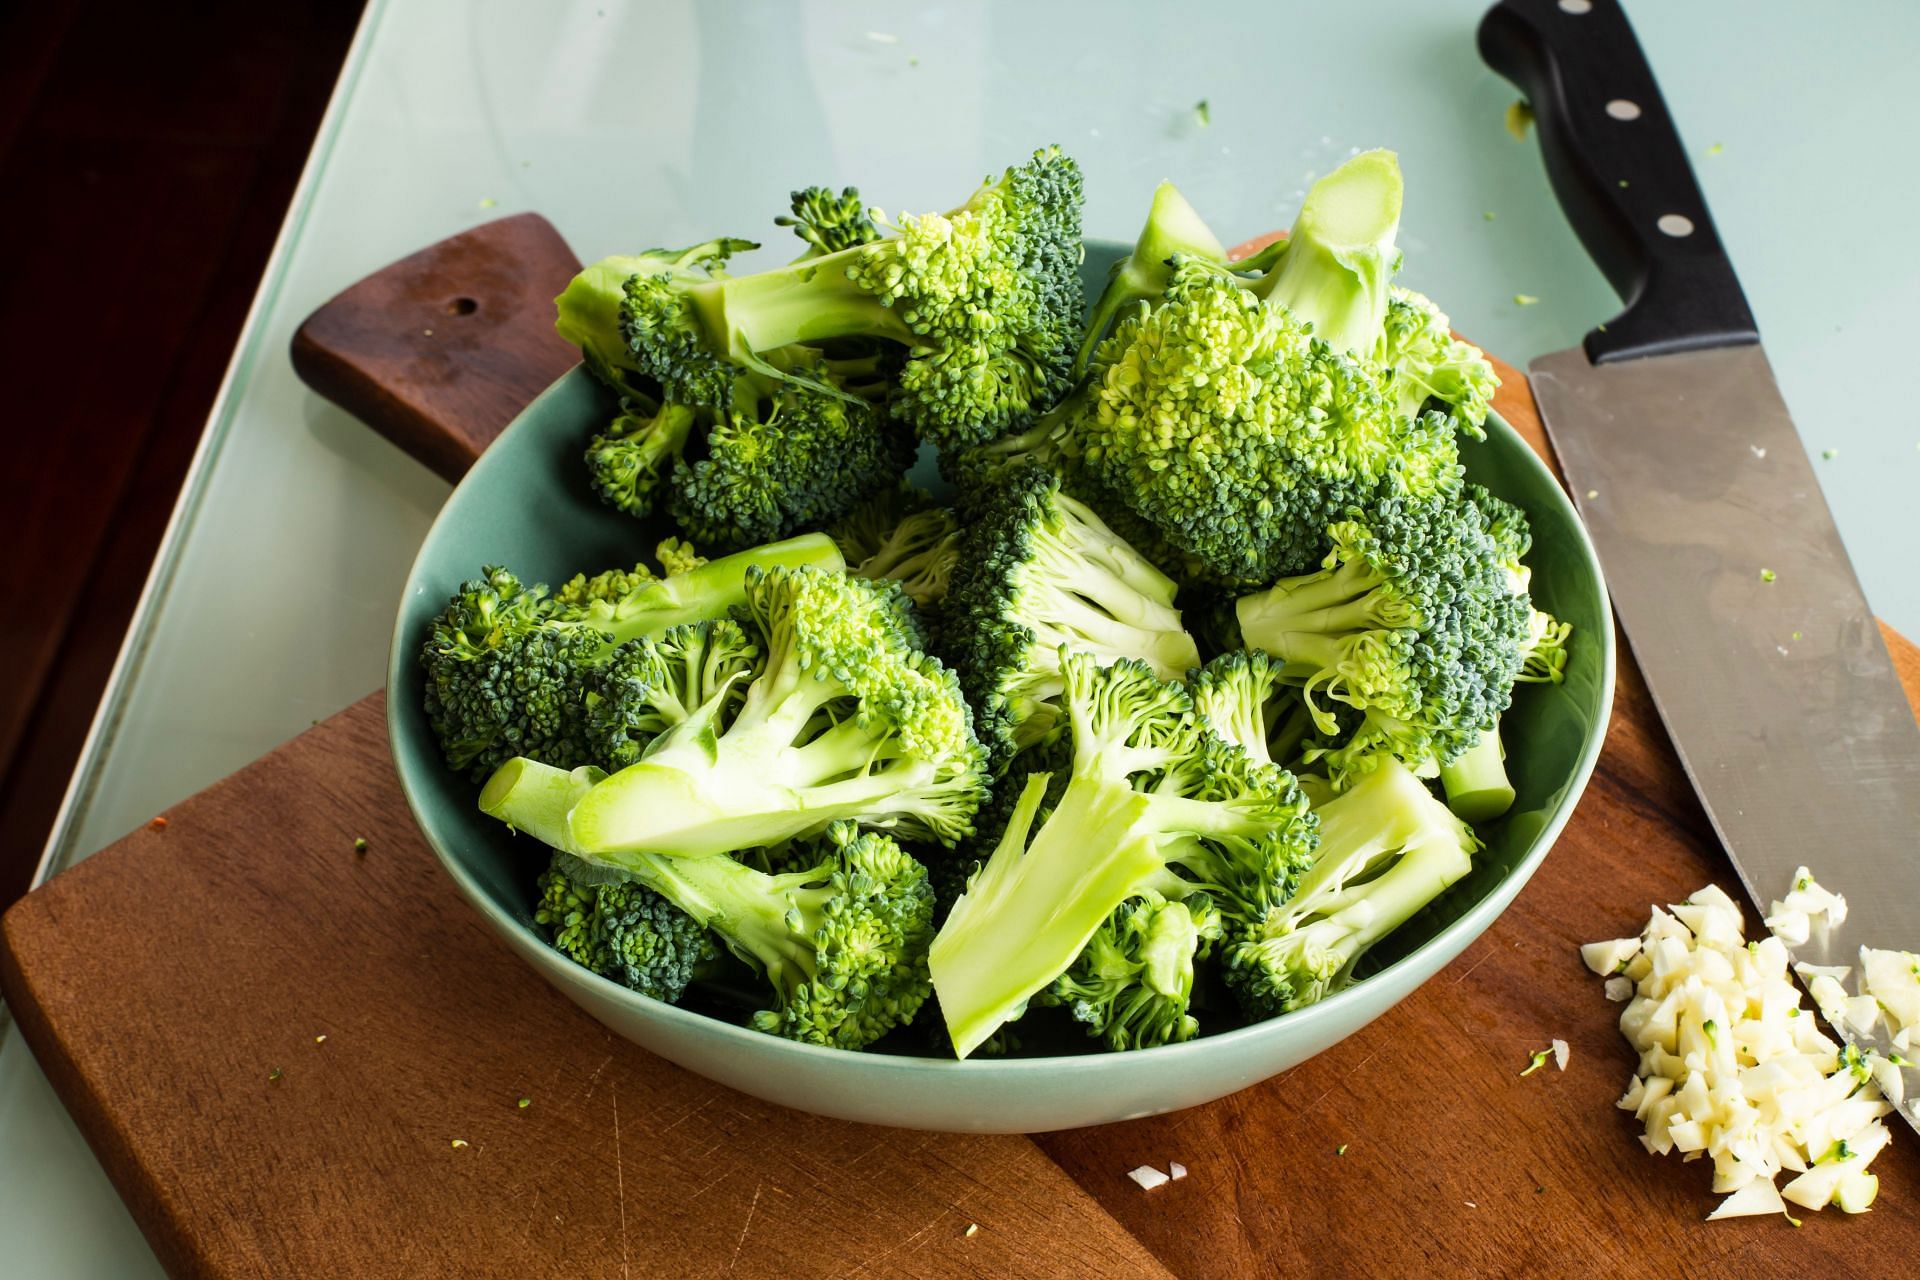 Broccoli may help prevent cardiovascular disease. (Image via Unsplash / Louis hansel)